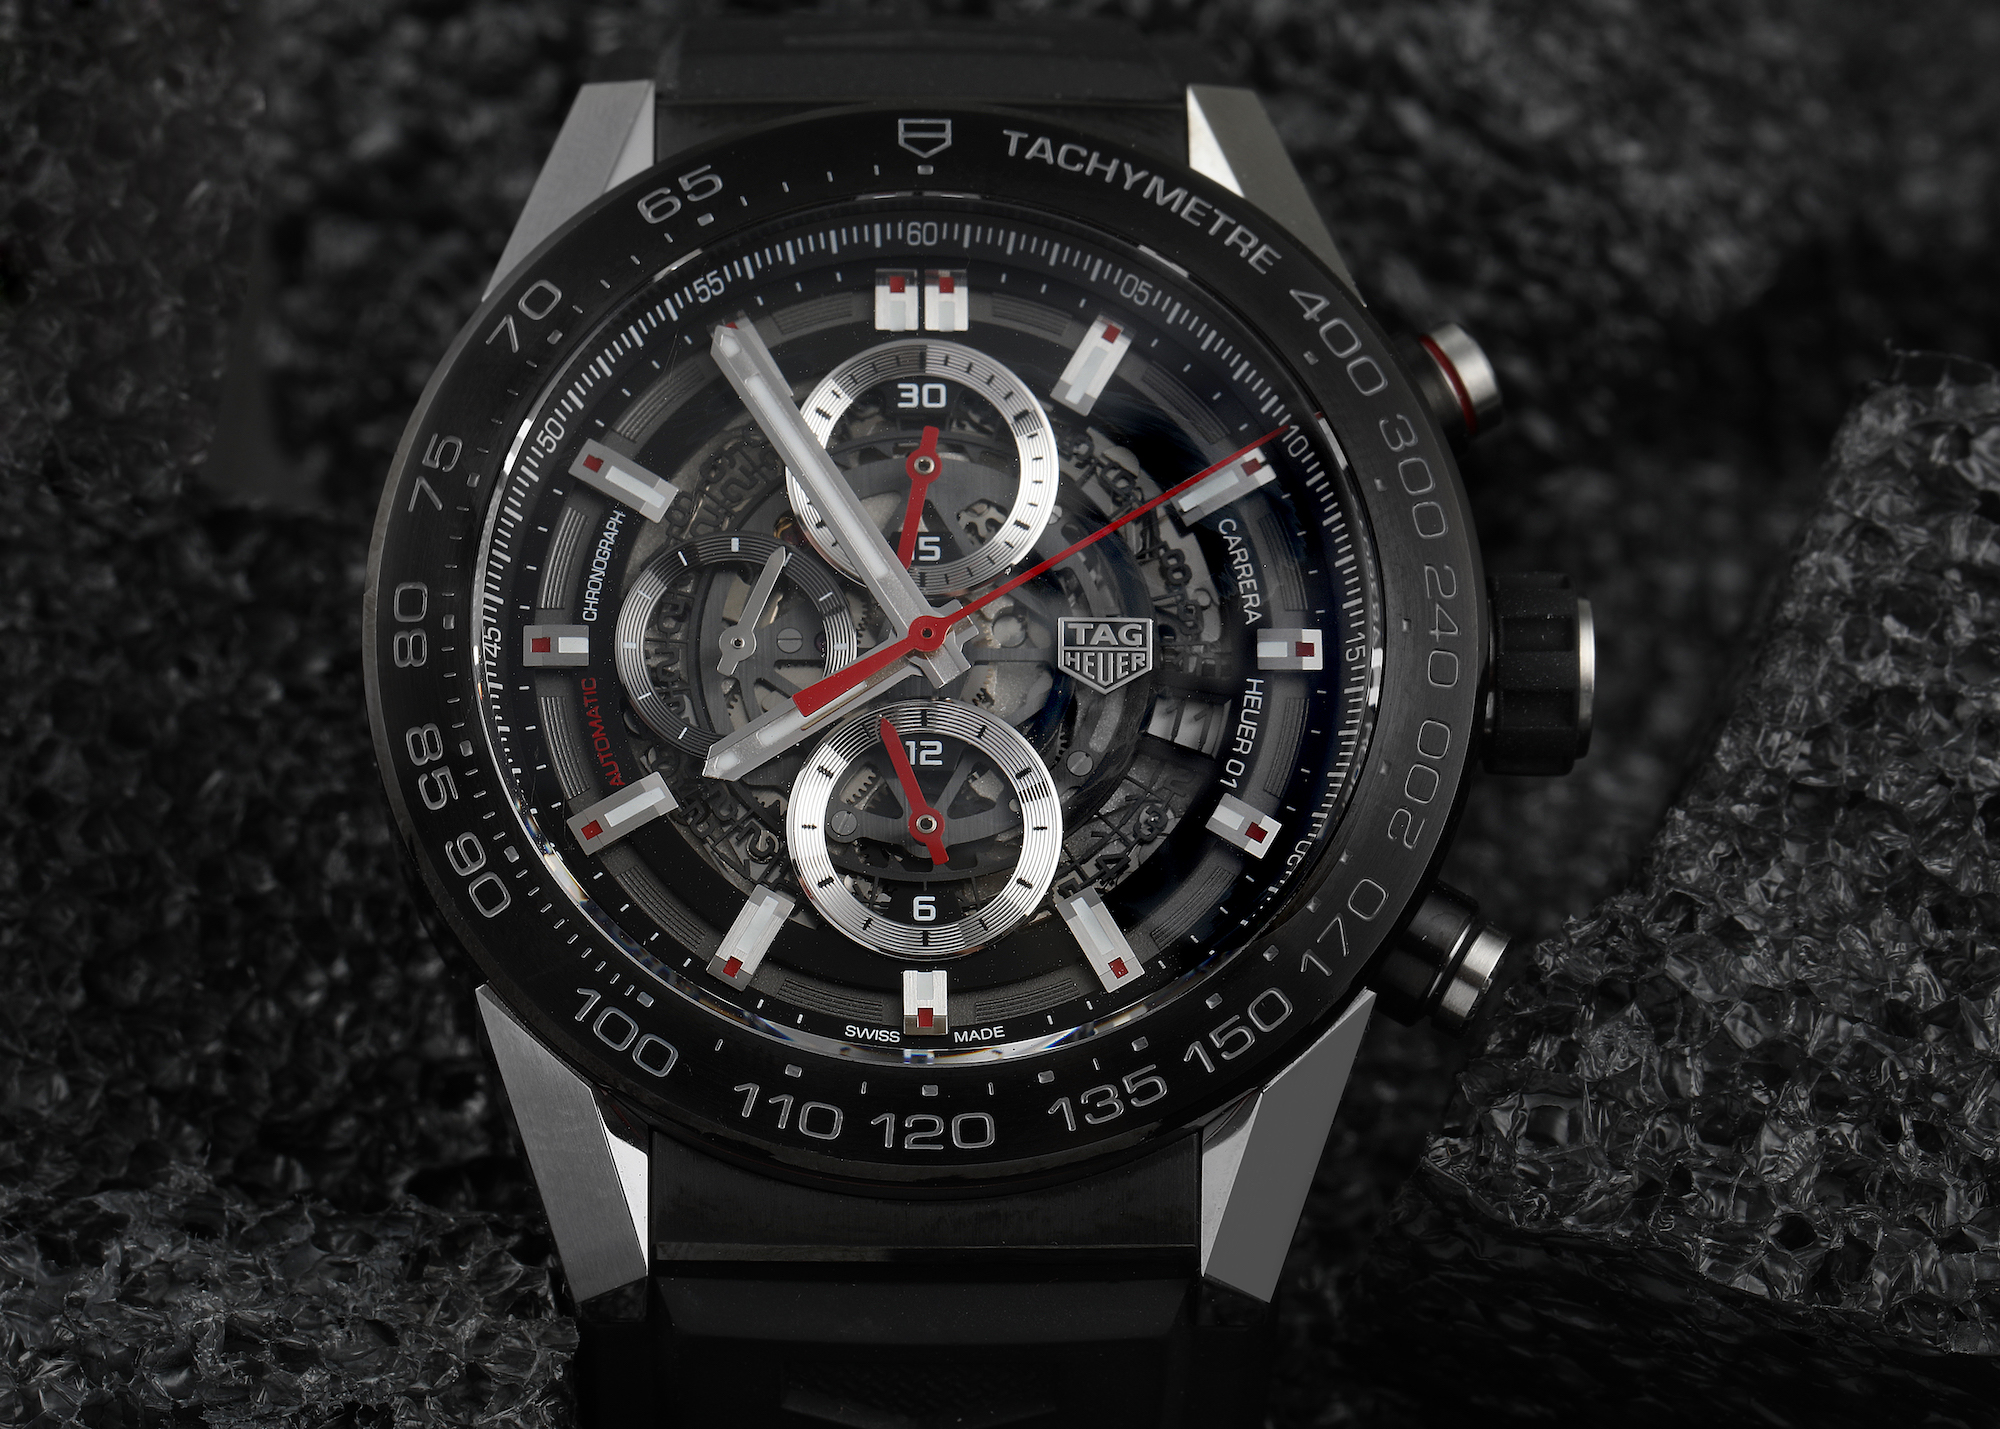 Luxury(Premium) Analog Tag Heuer Cr7 Watch For Men